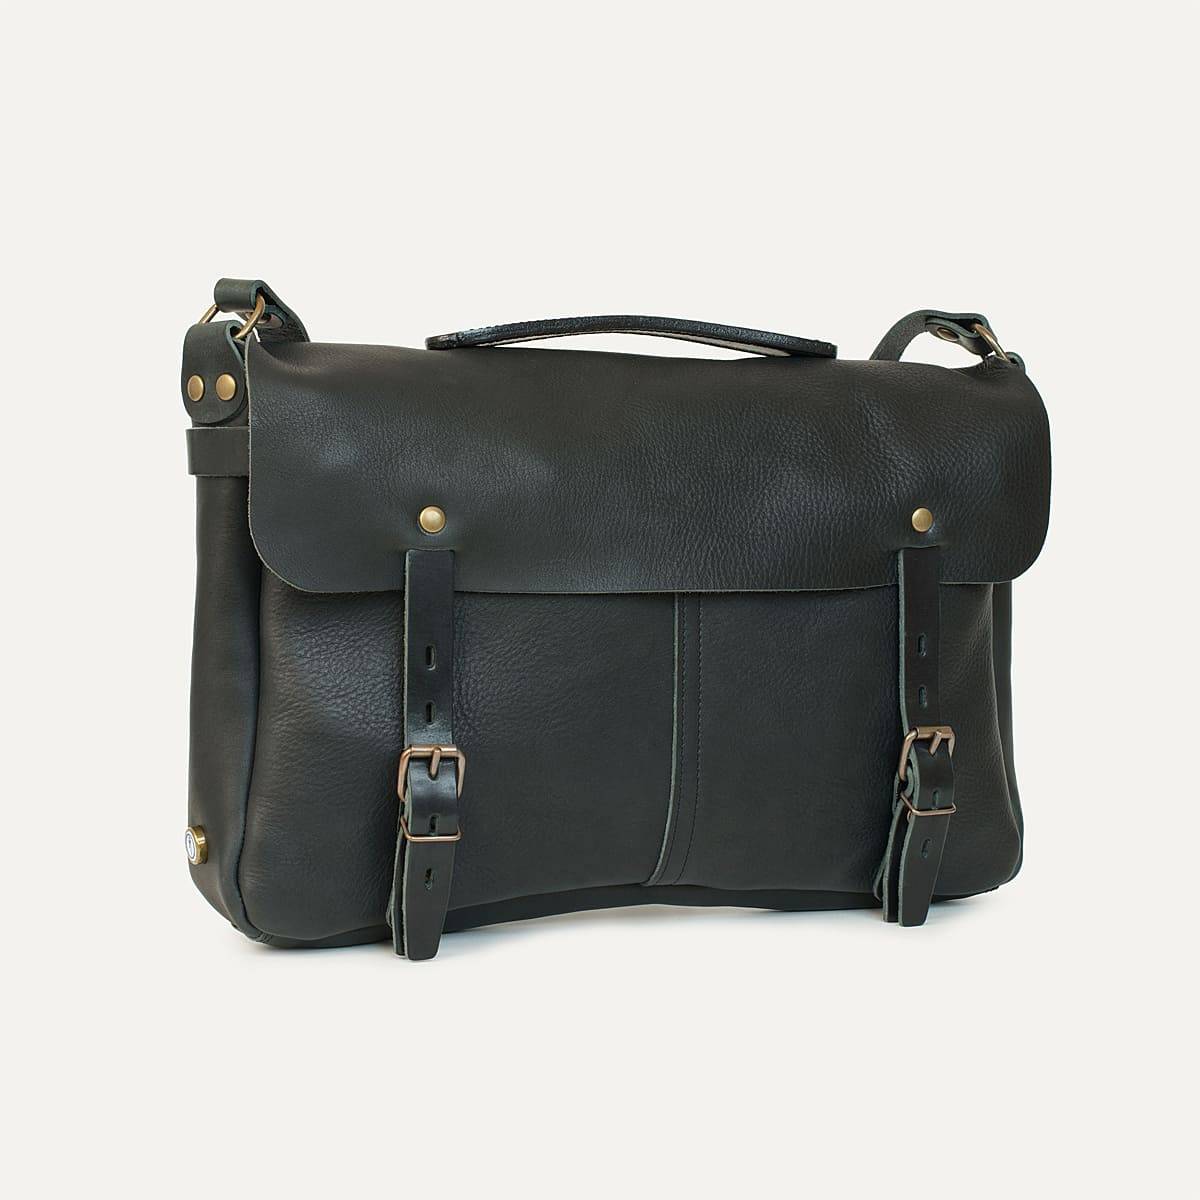 Justin Plumber bag I Leather satchel bag for Men | Bleu de chauffe